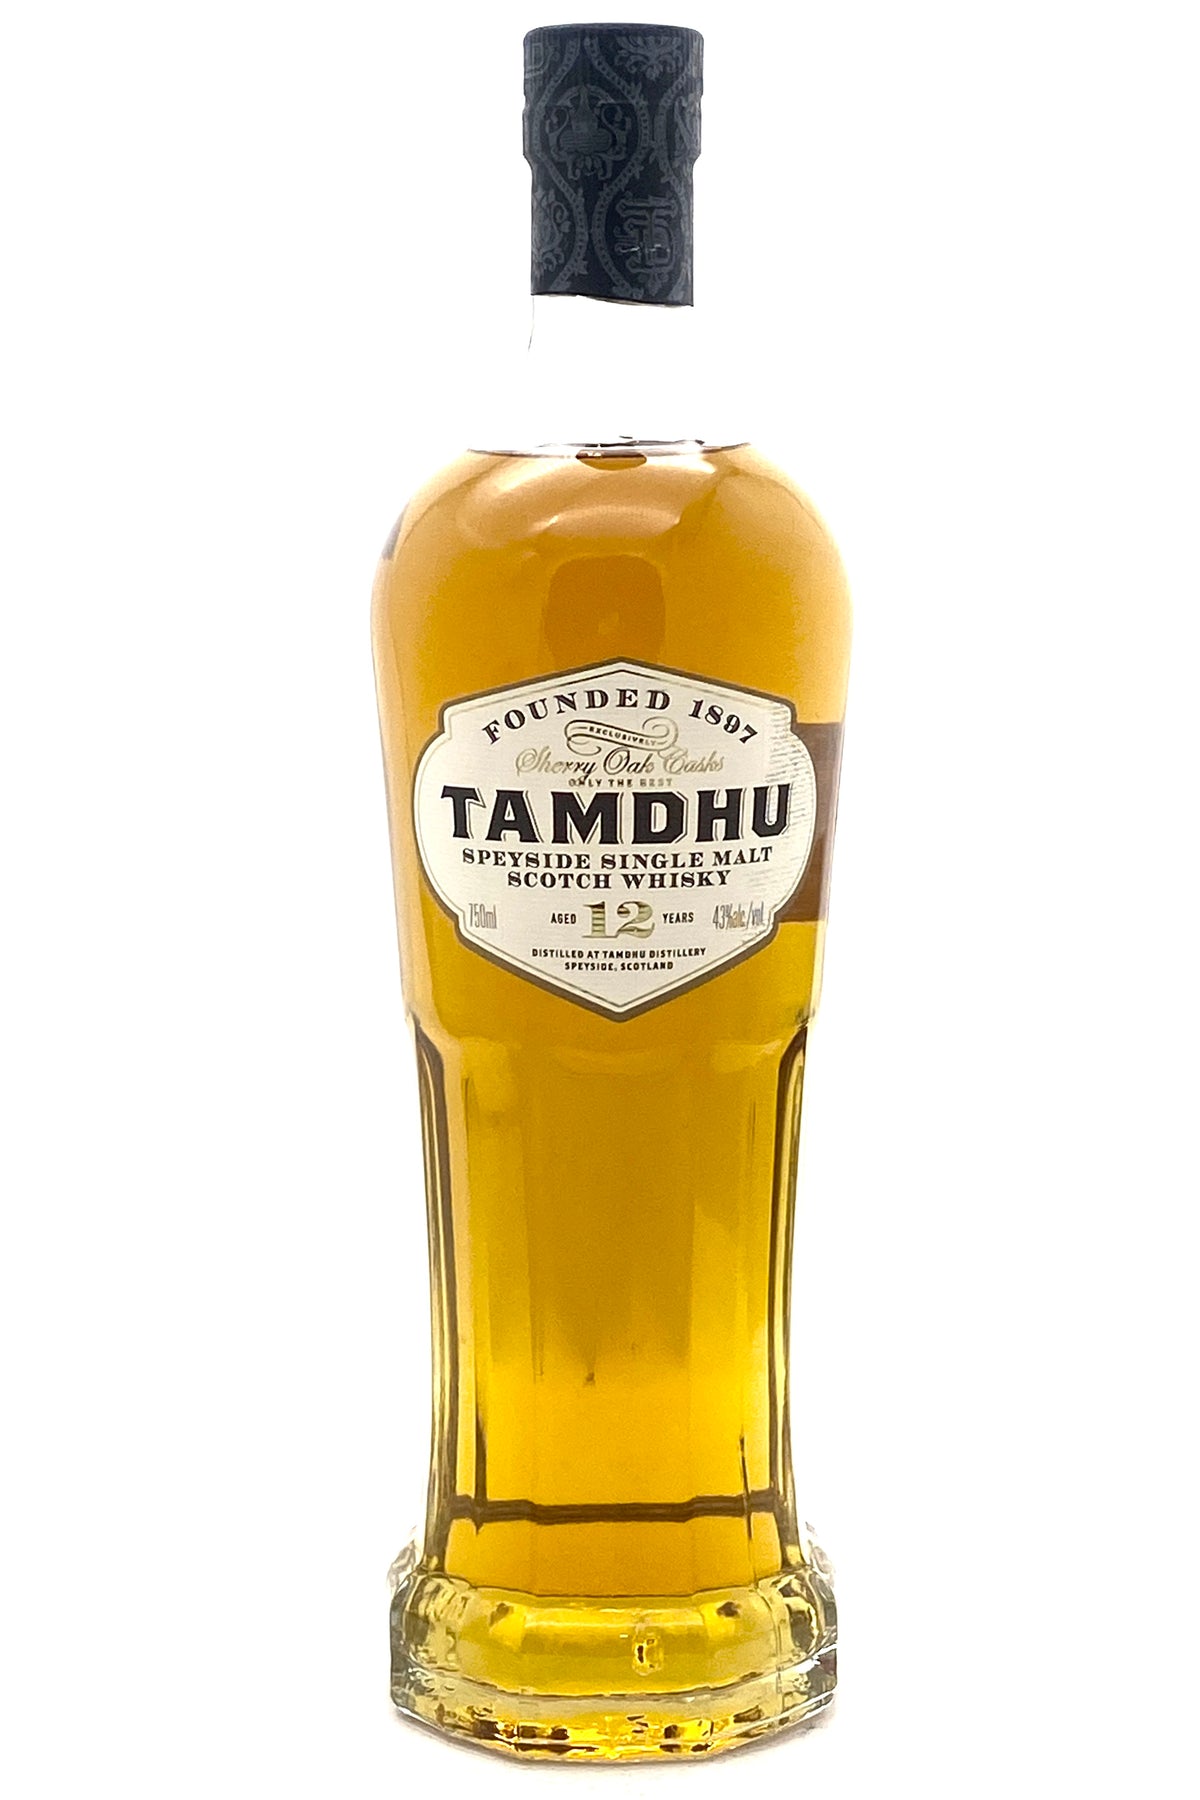 Tamdhu 12 Year Old Single Malt Scotch Whisky